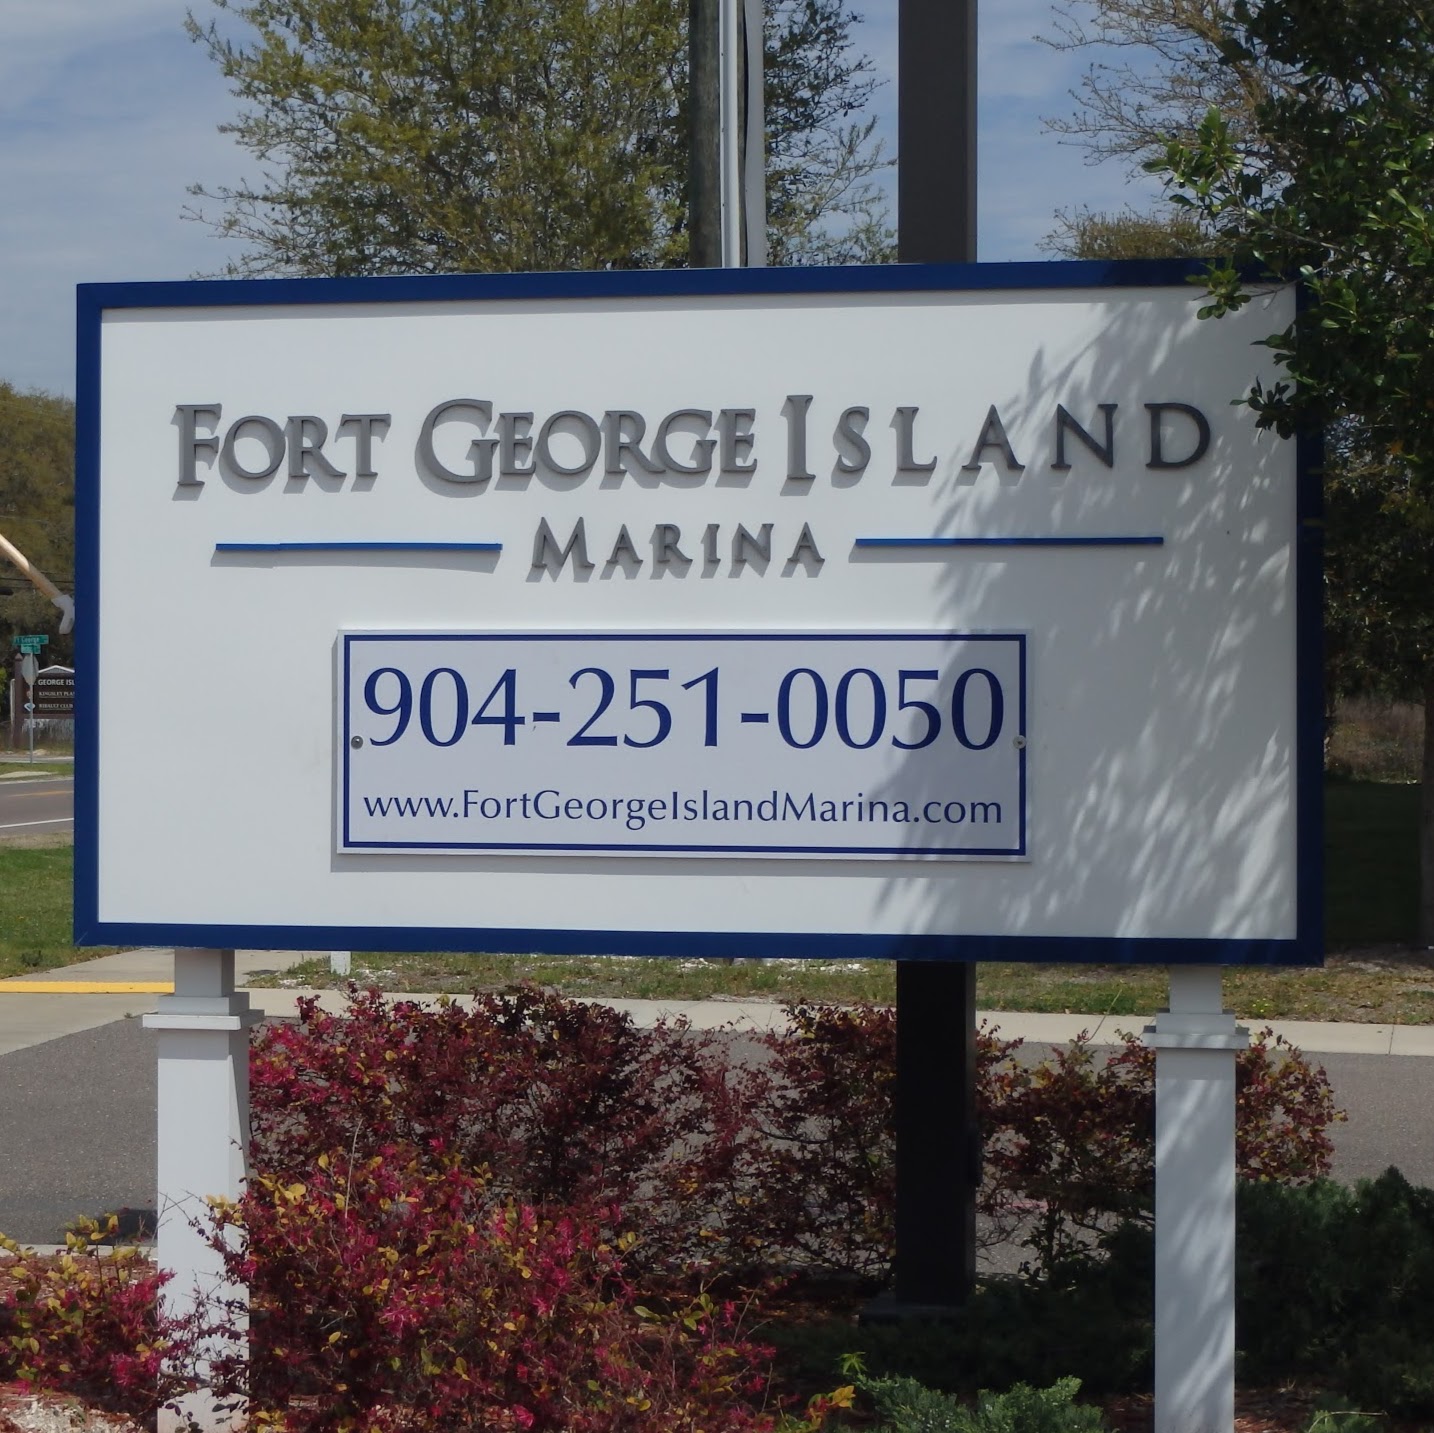 Fort George Island Marina in Jacksonville, FL